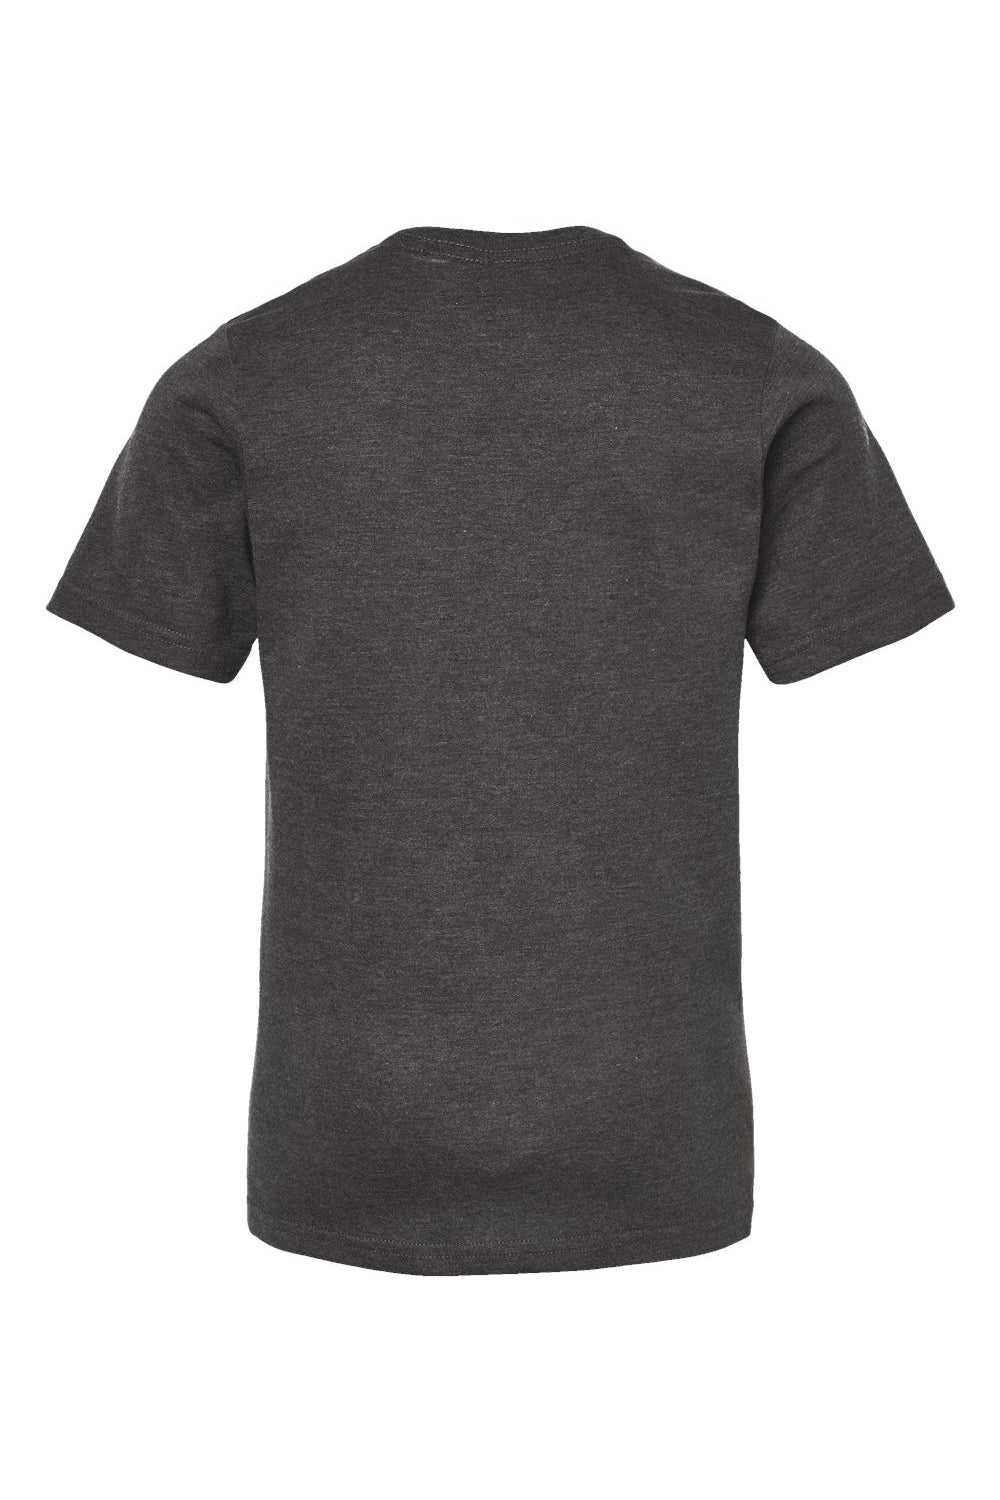 Tultex 295 Youth Jersey Short Sleeve Crewneck T-Shirt Heather Charcoal Grey Flat Back